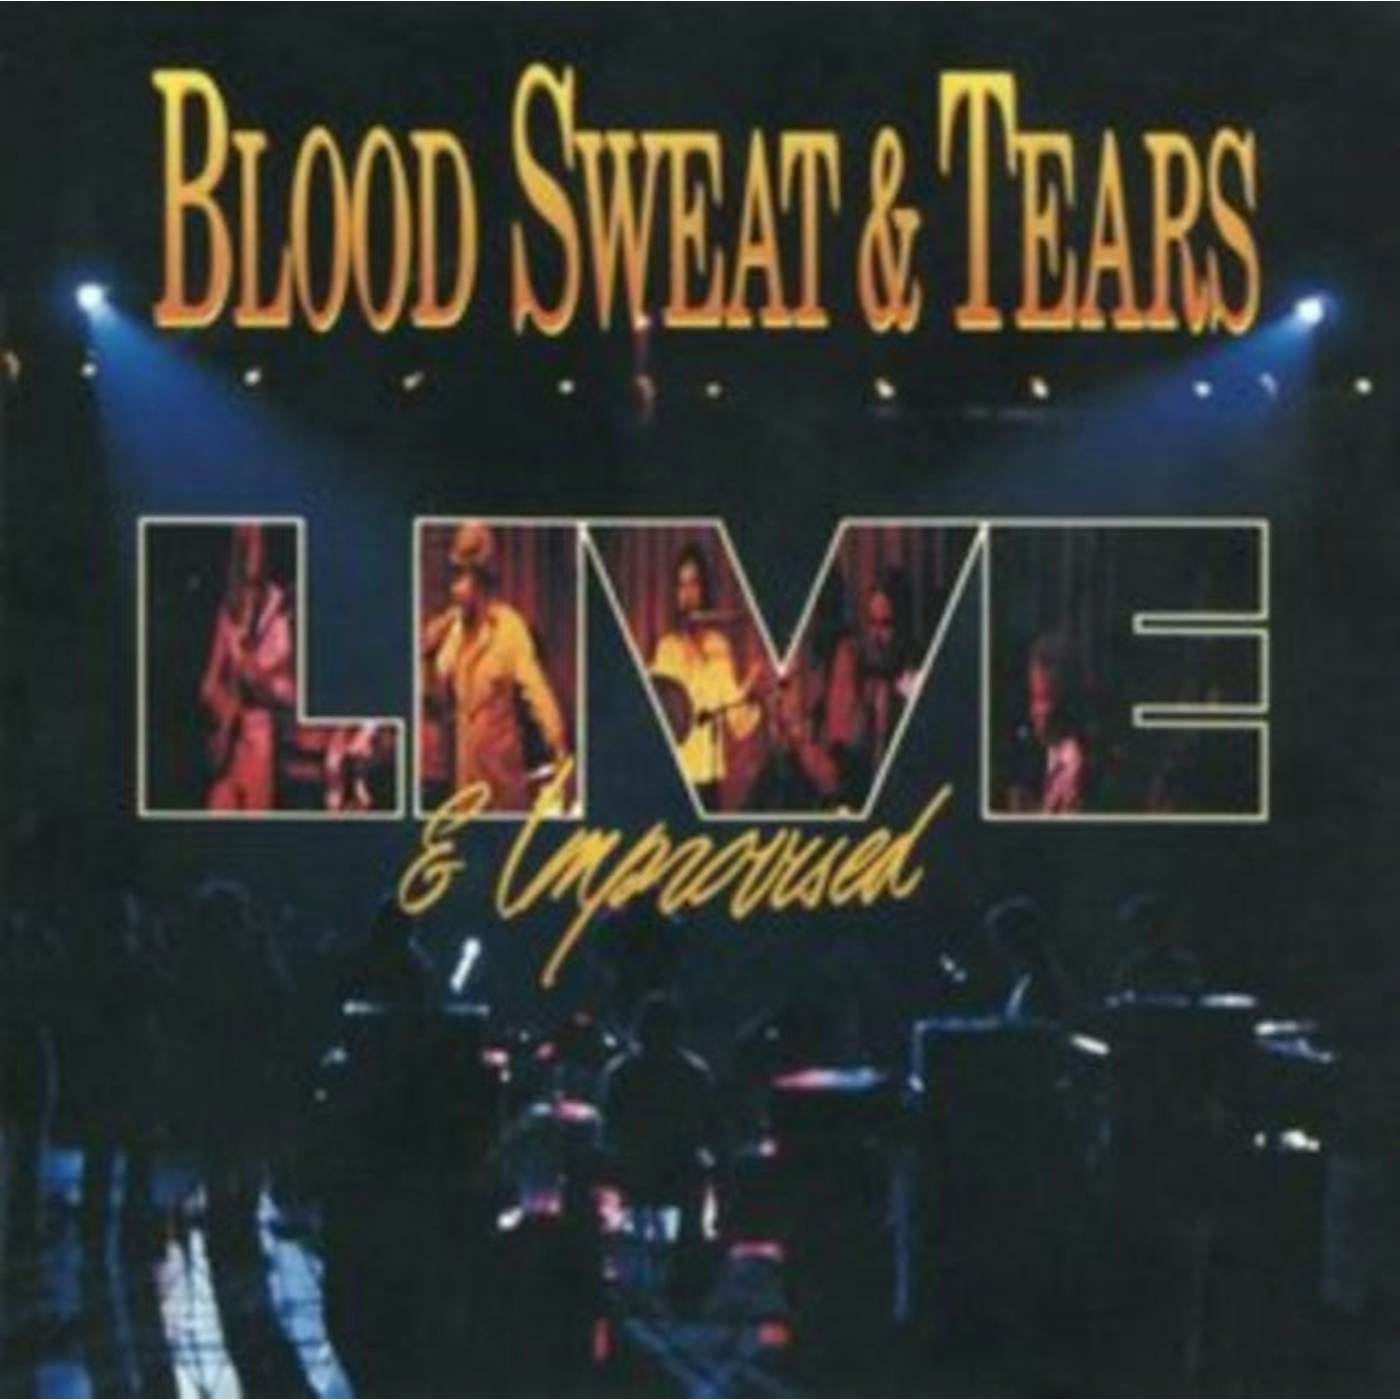 Blood, Sweat & Tearse And Improvised CD